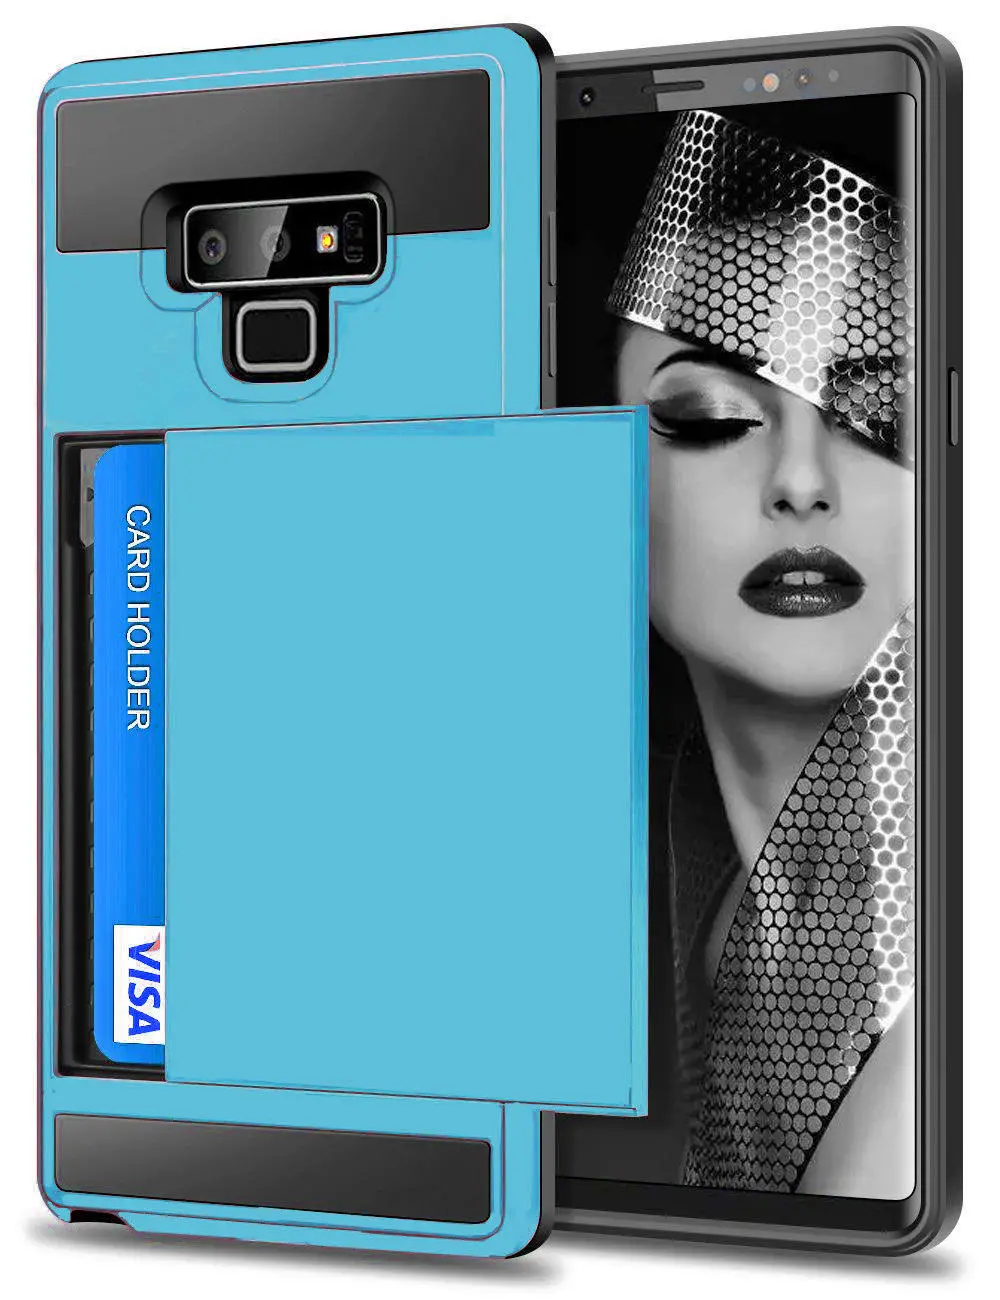 VRSDES слайд слот для карт чехол для телефона для samsung Galaxy S8 S9 плюс S7 S6 Edge Note 8 9 Гибридный чехол для samsung J2 J3 J4 J6 J7 - Цвет: Sky Blue